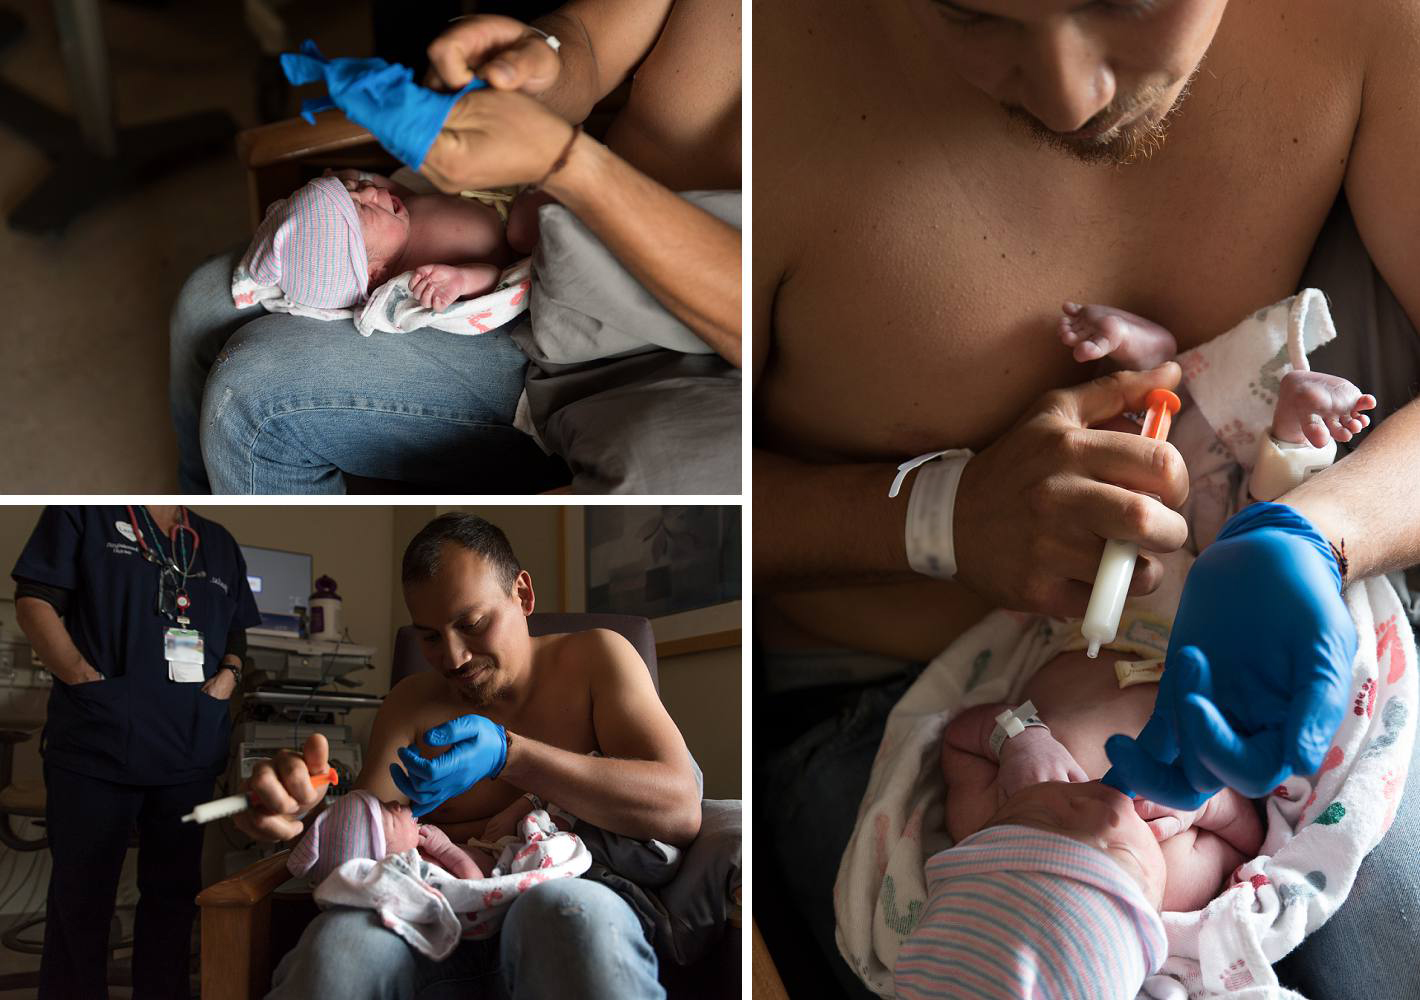 Feeding newborn baby with syringe and glove